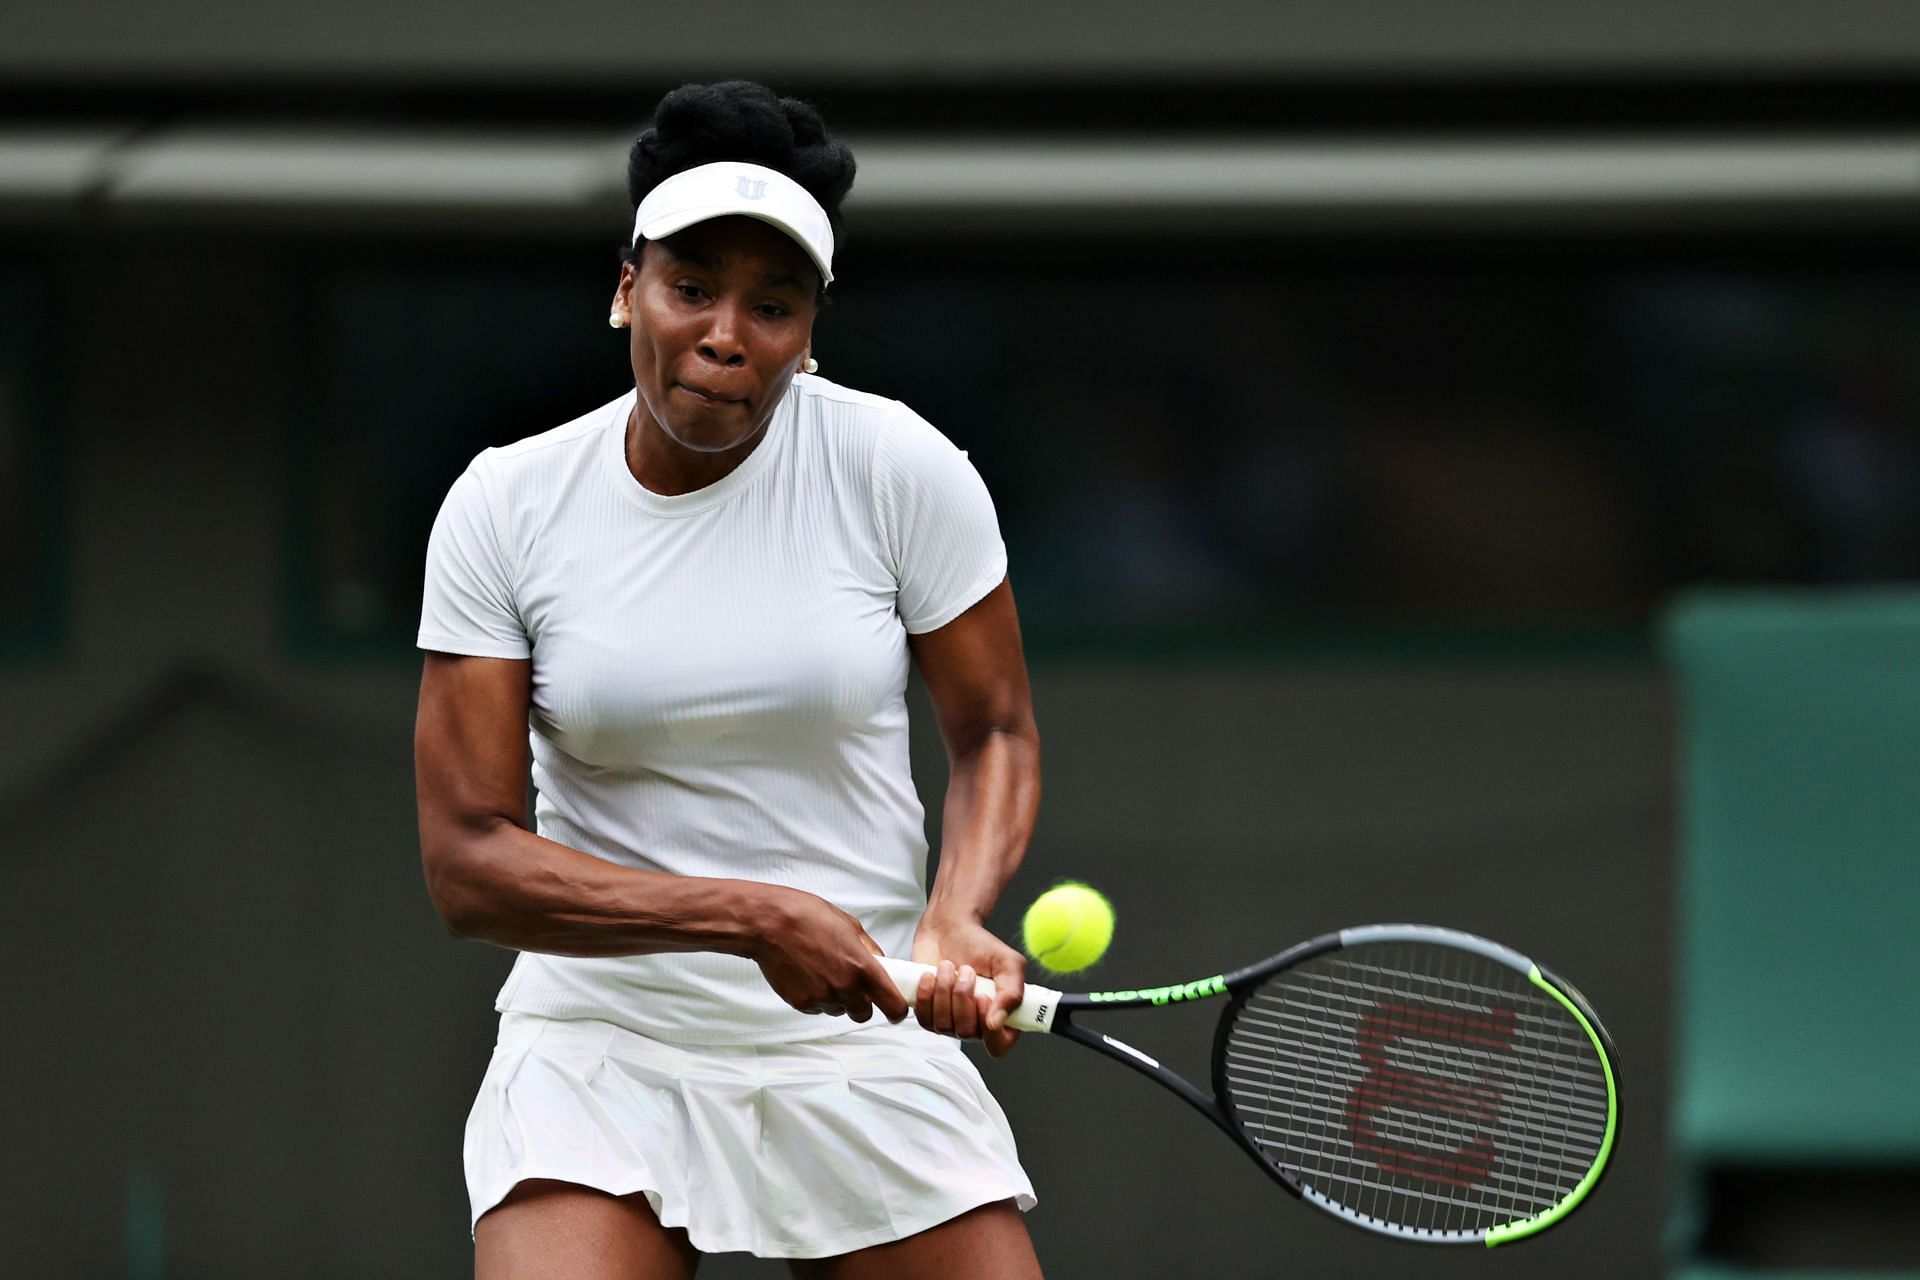 Venus Williams in action at Wimbledon